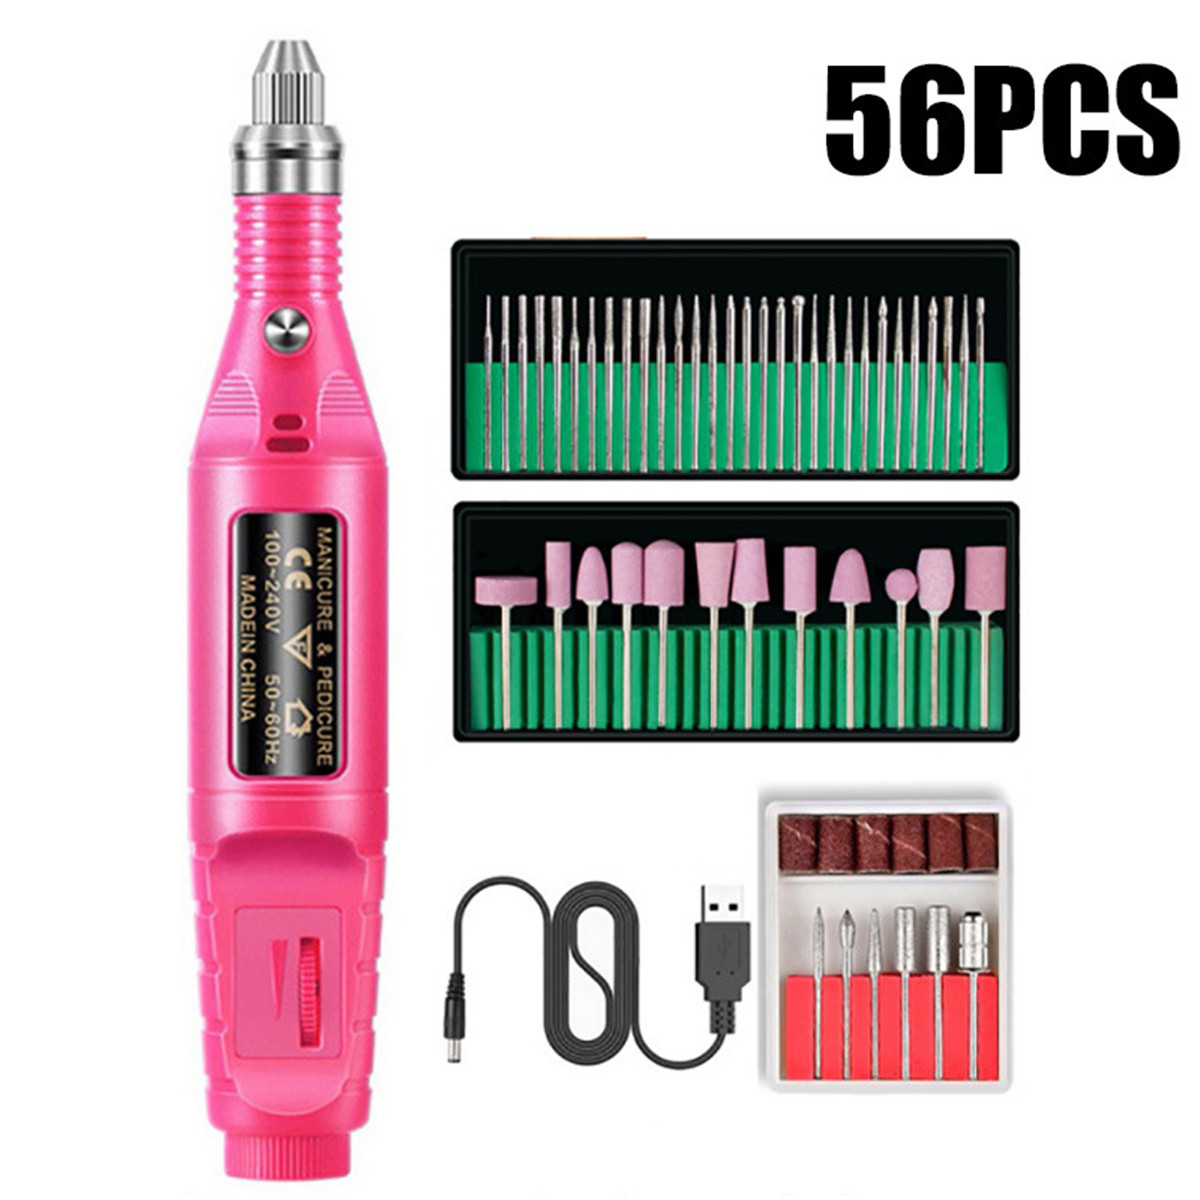 214425156pcs-Electric-Nail-File-Art-Drill-Pen-Kit-Professional-Pedicure-Manicure-Polisher-Tool-1753881-10